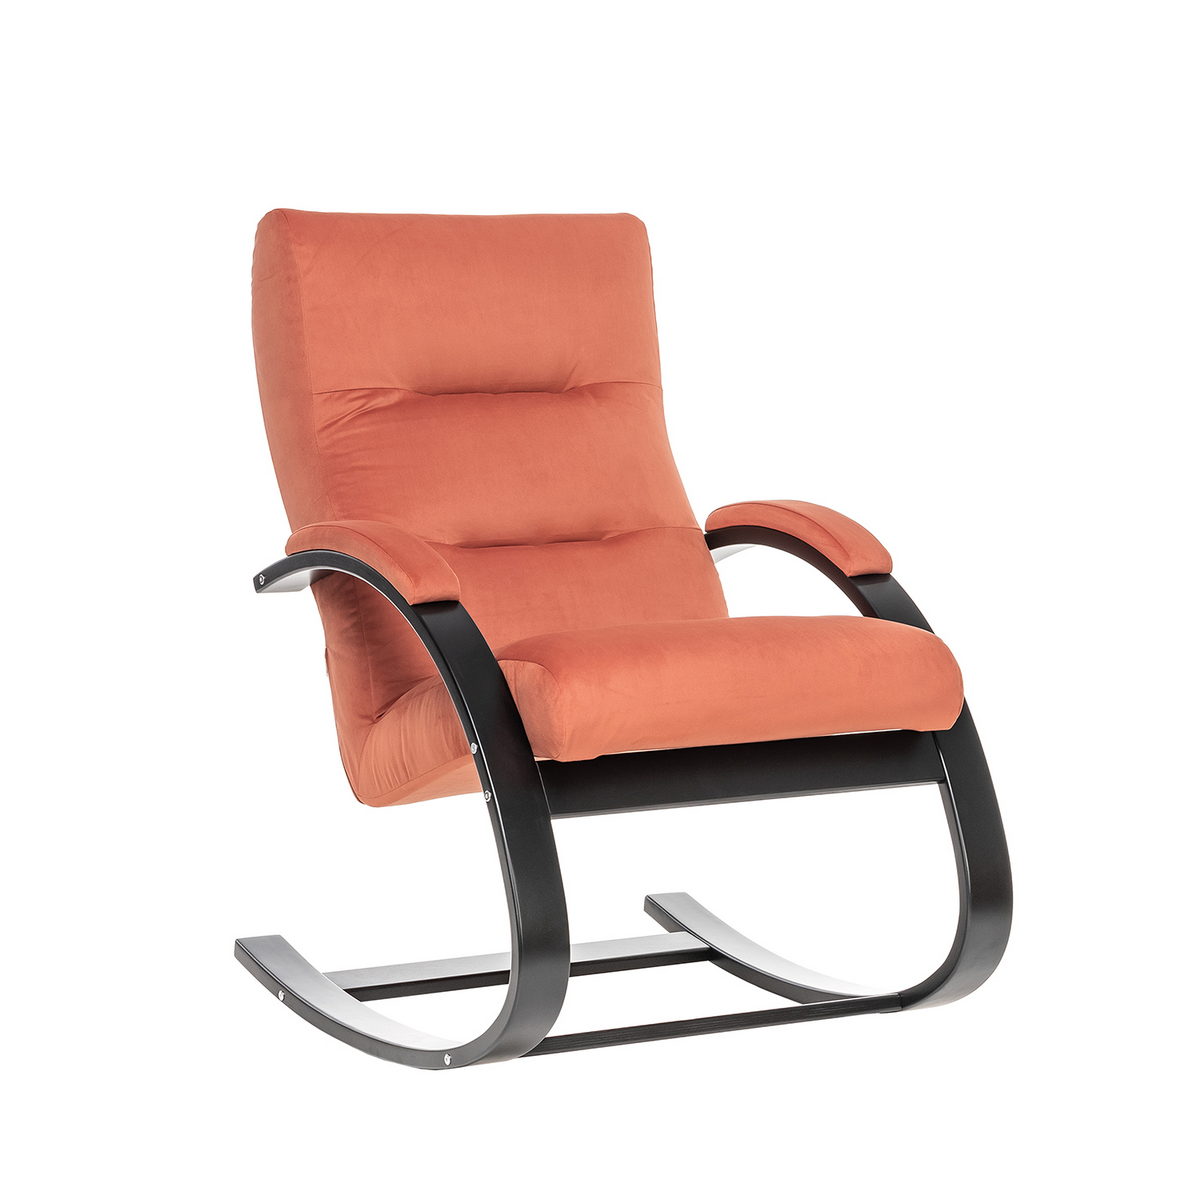 Кресло-качалка Leset Милано (Импэкс). Цвет каркаса: Венге; Цвет обивки: V39 оранжевый